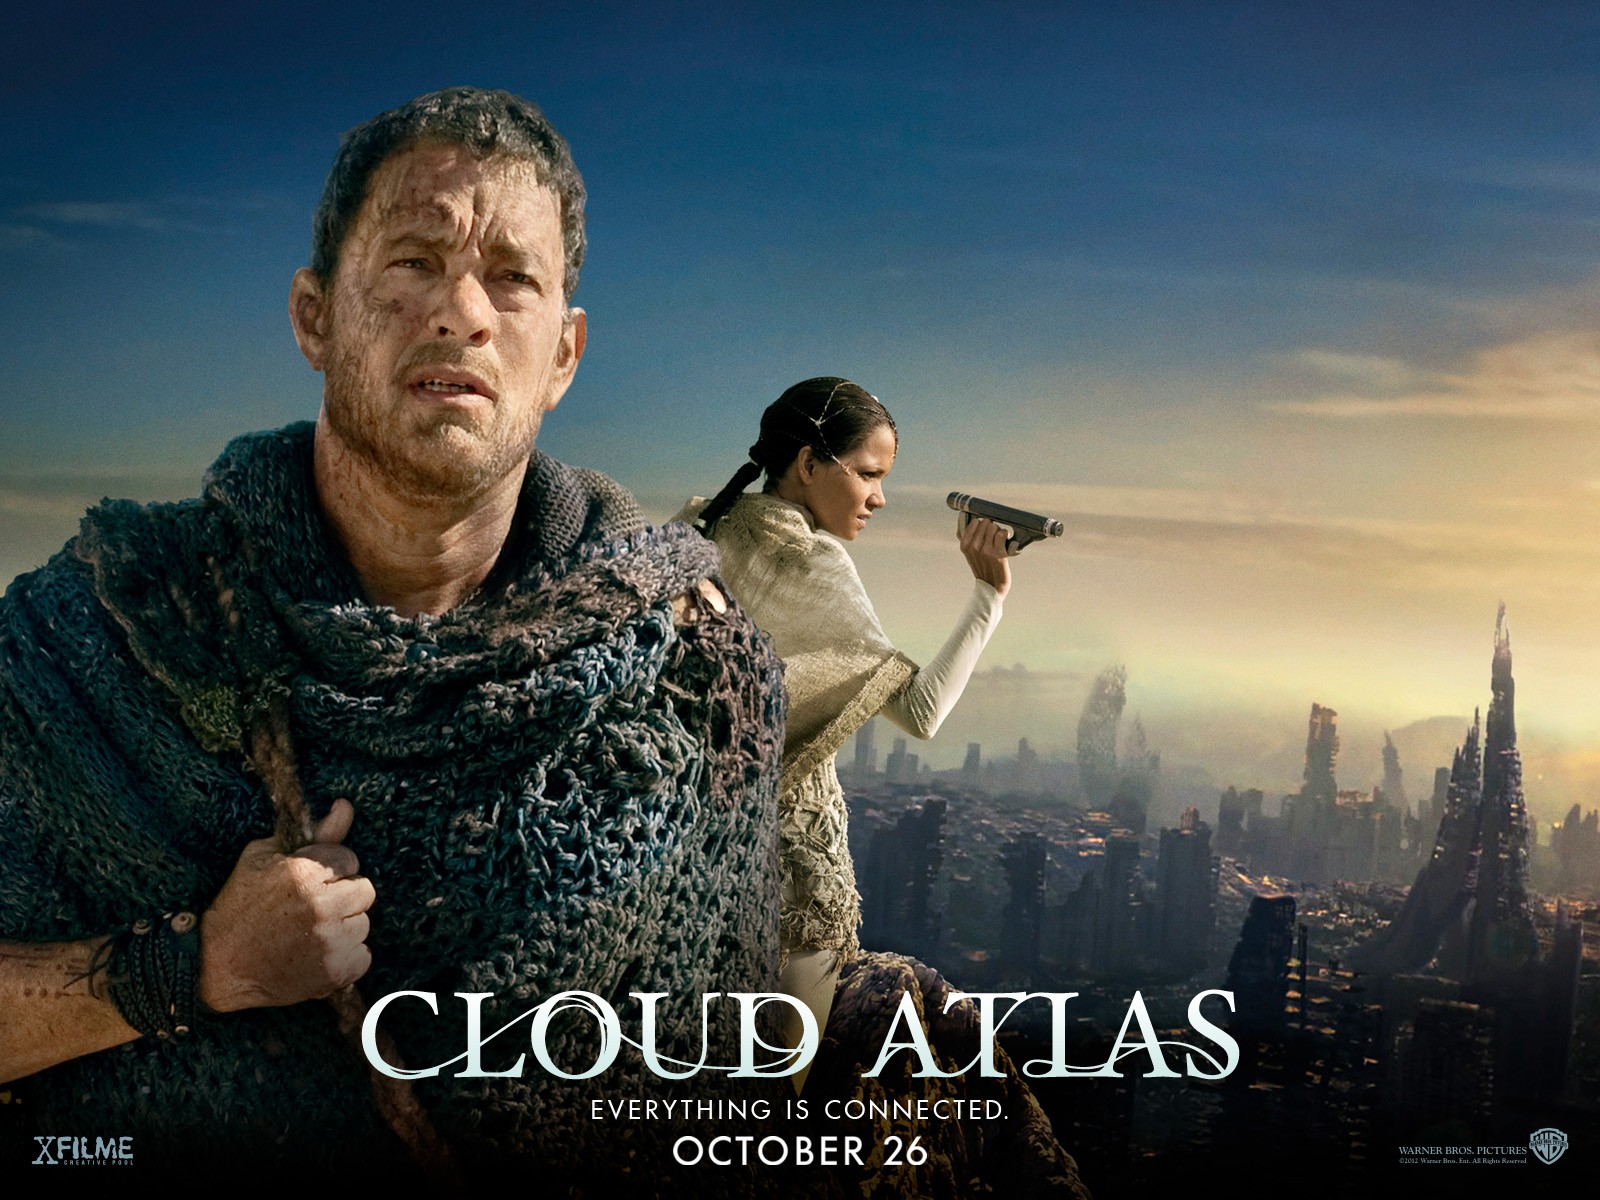 cloud_atlas